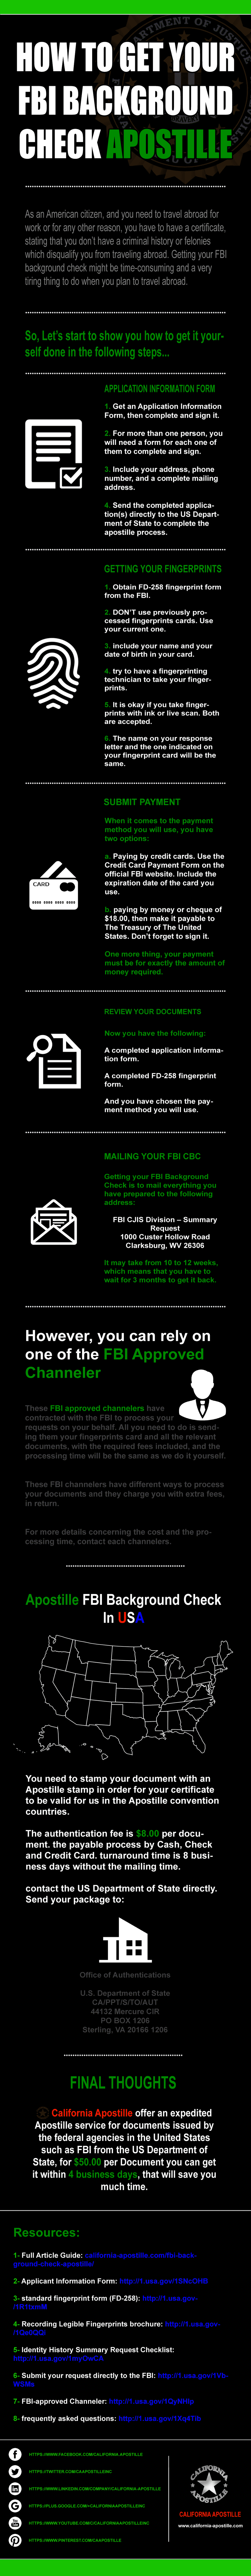 FBI Background Check Apostille